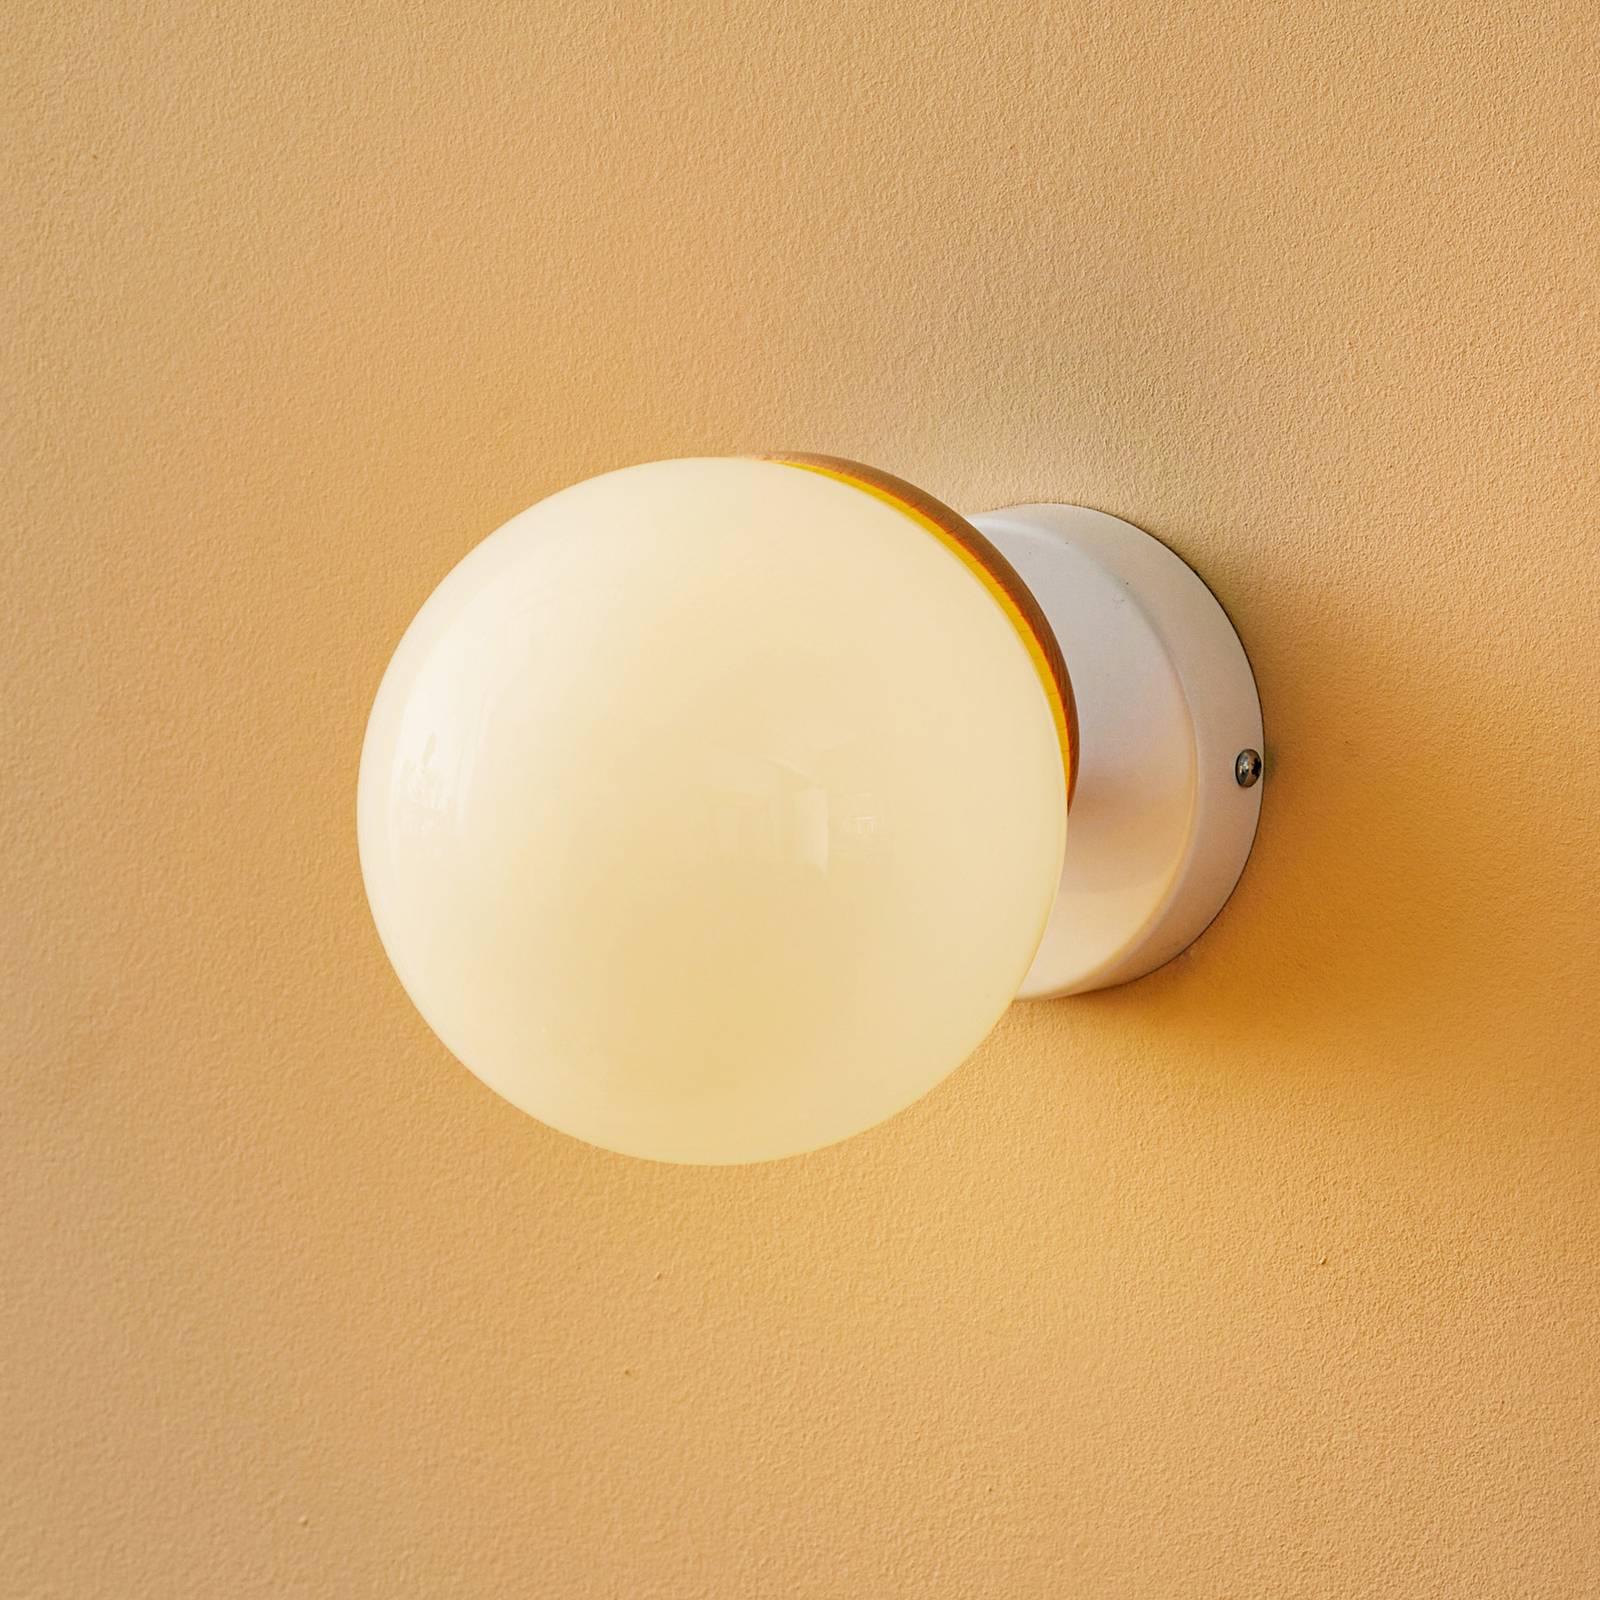 eko-light applique sfera 1 lampe, verre/blanc/bois